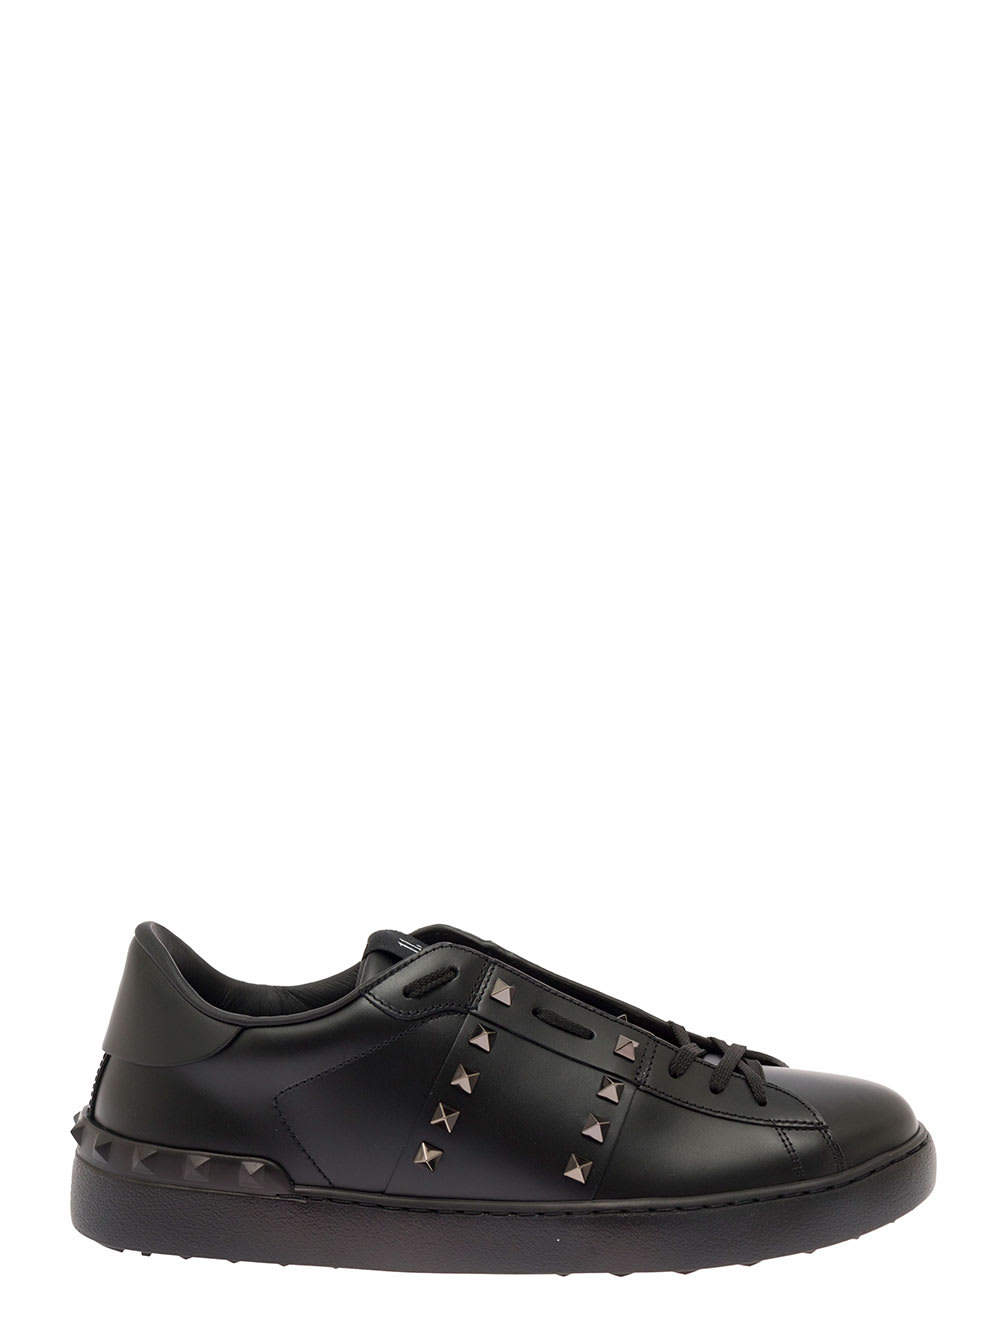 Valentino Garavani Rockstud Untitled Black Leather Sneakers Valentino Man